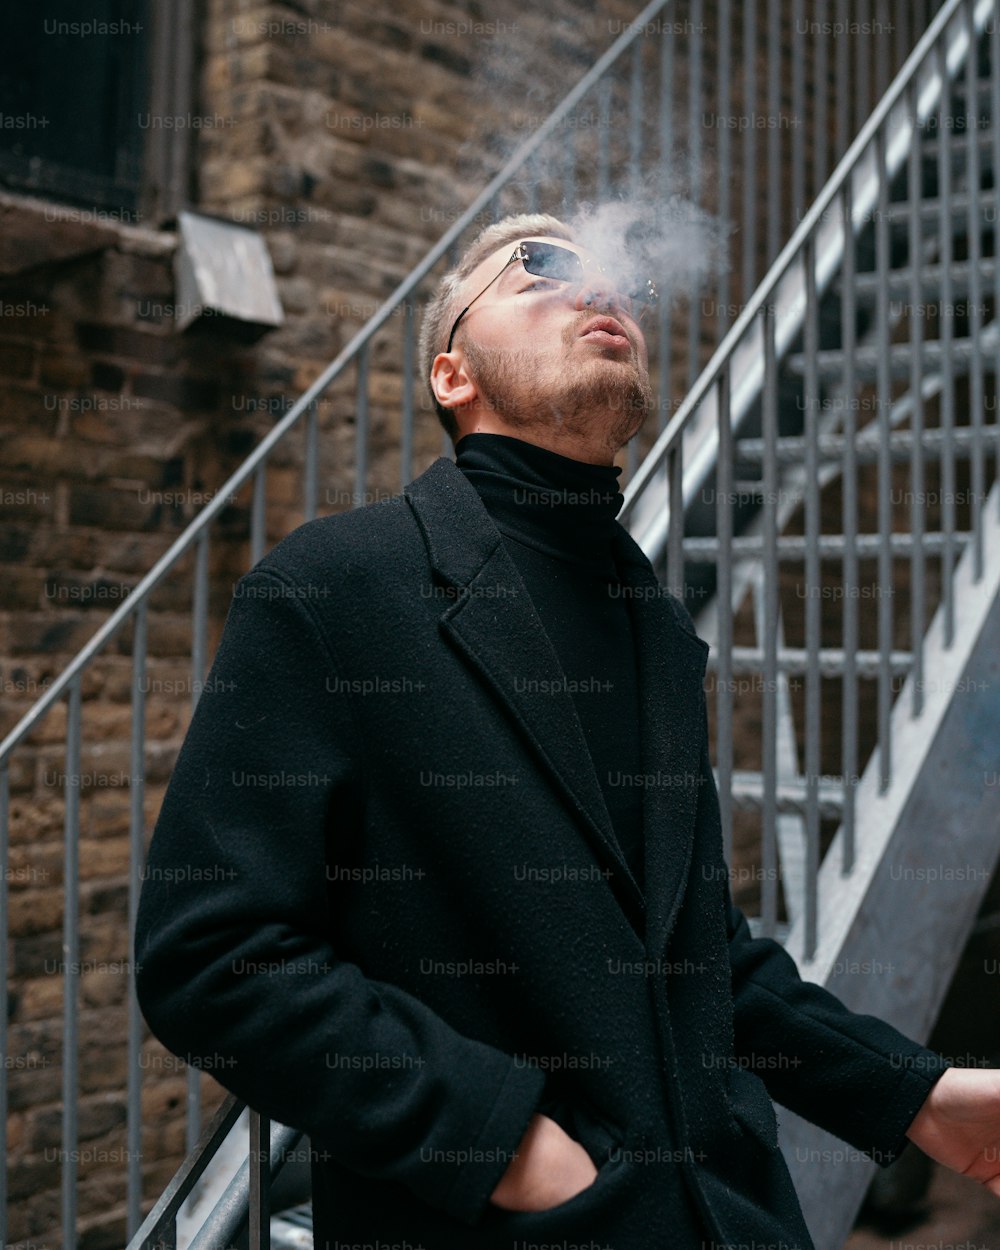 a man in a black coat smoking a cigarette